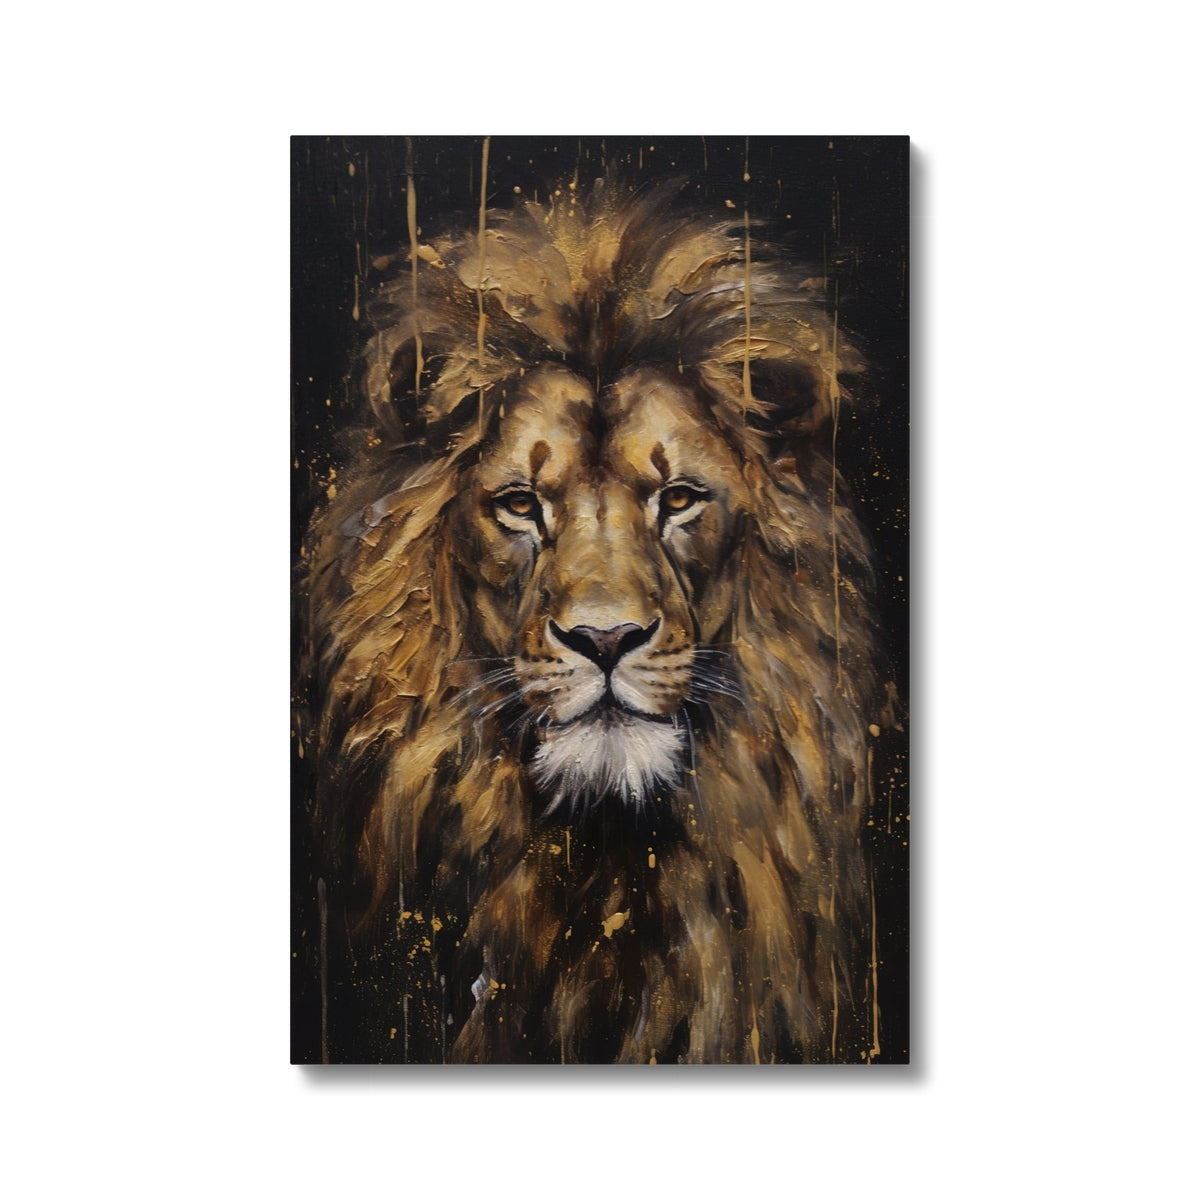 Black & Gold Lion Painting Canvas